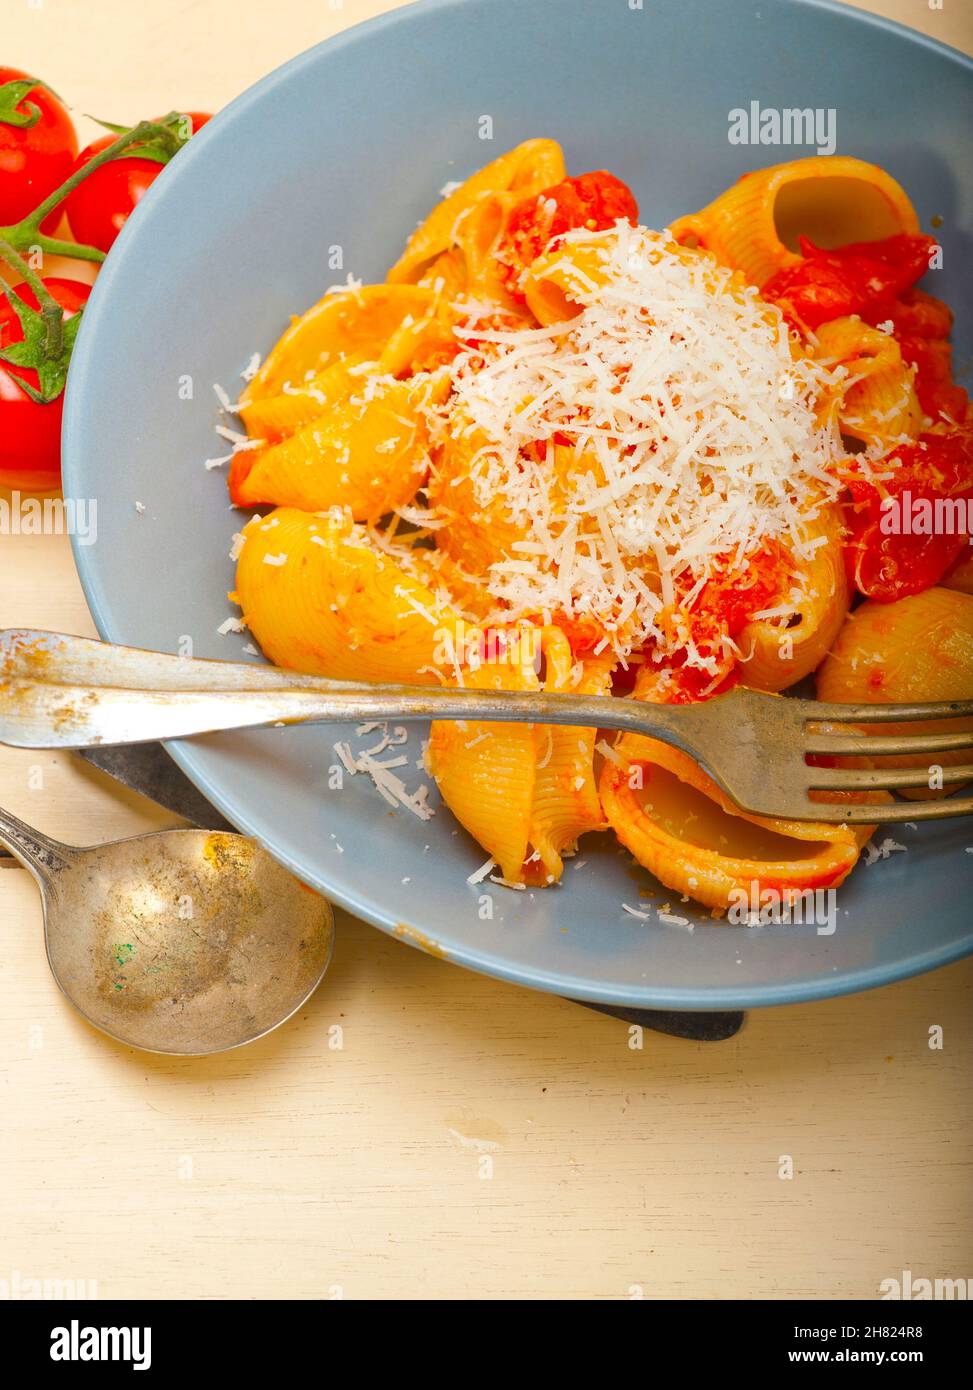 Italienischen Schnecke Lumaconi Pasta mit Reife Cherry-Tomaten-sauce Zutaten Stockfoto